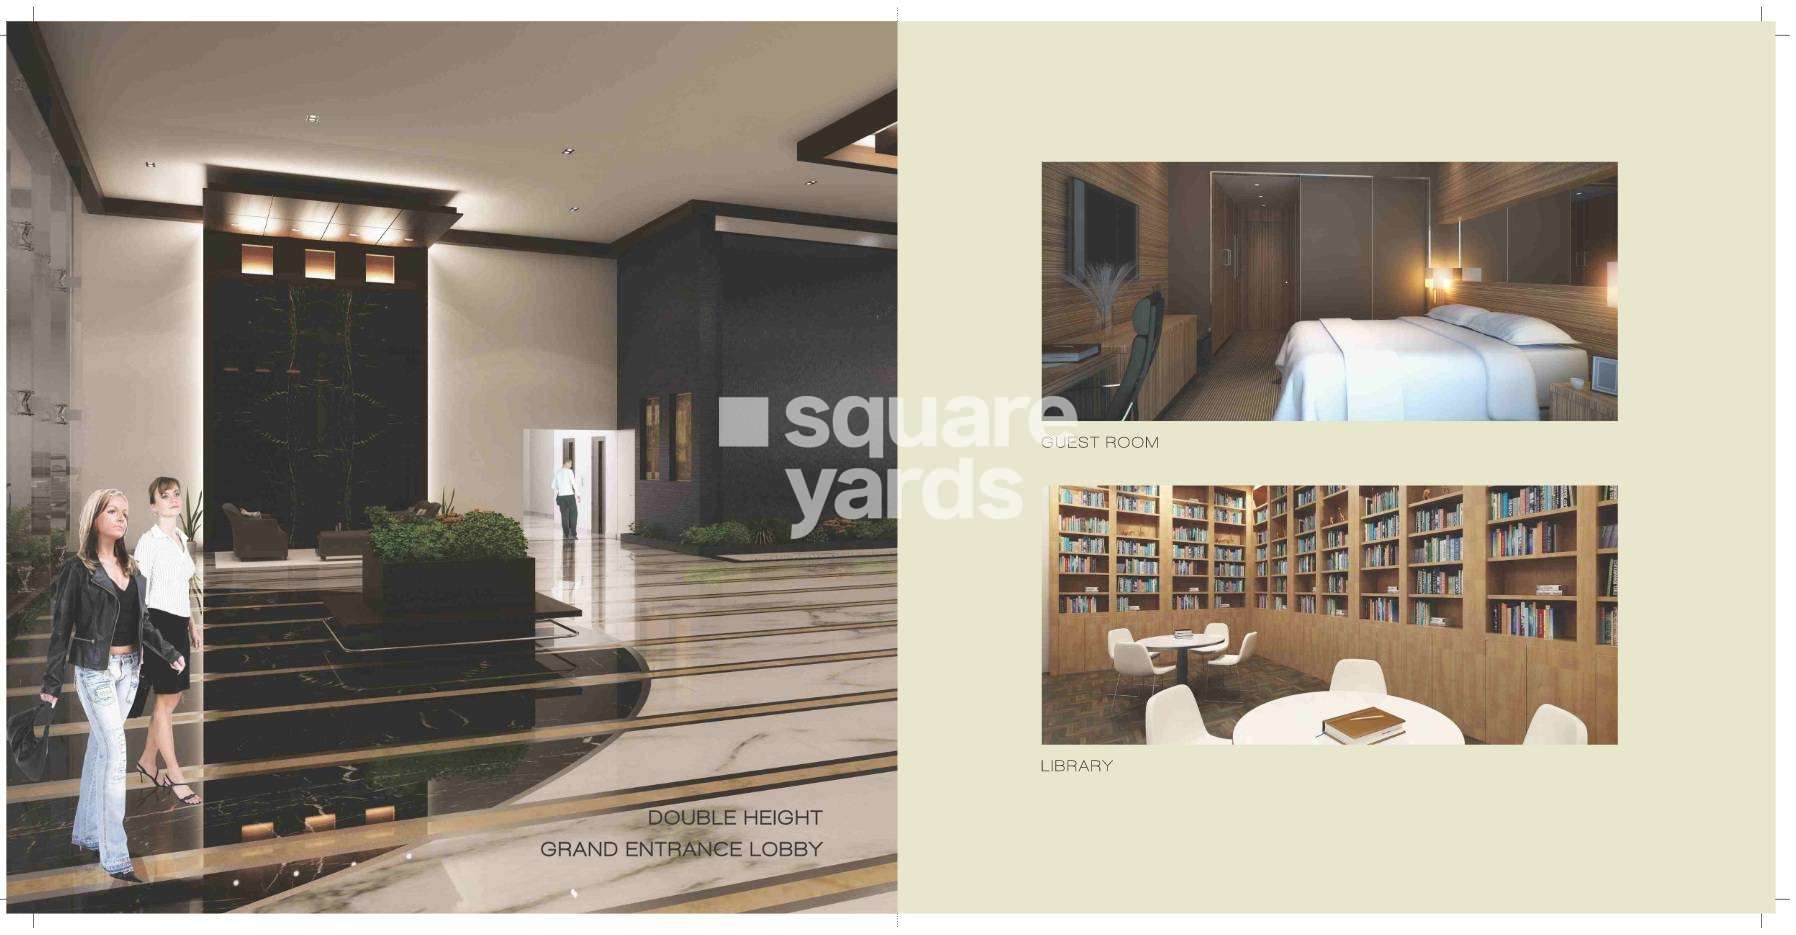 jp decks project amenities features2